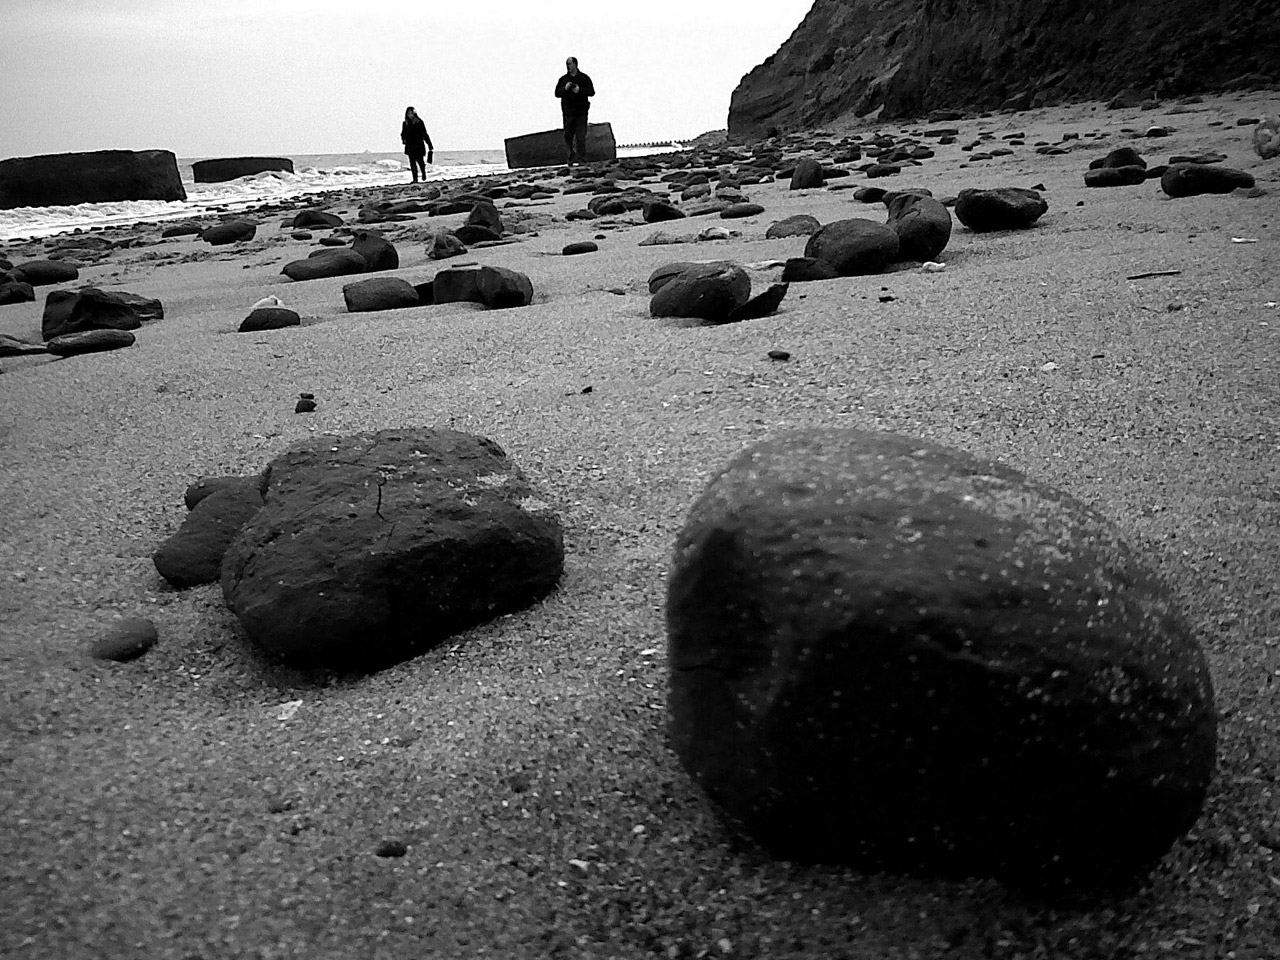 Pebble,stone,beach,people,sand - free image from needpix.com